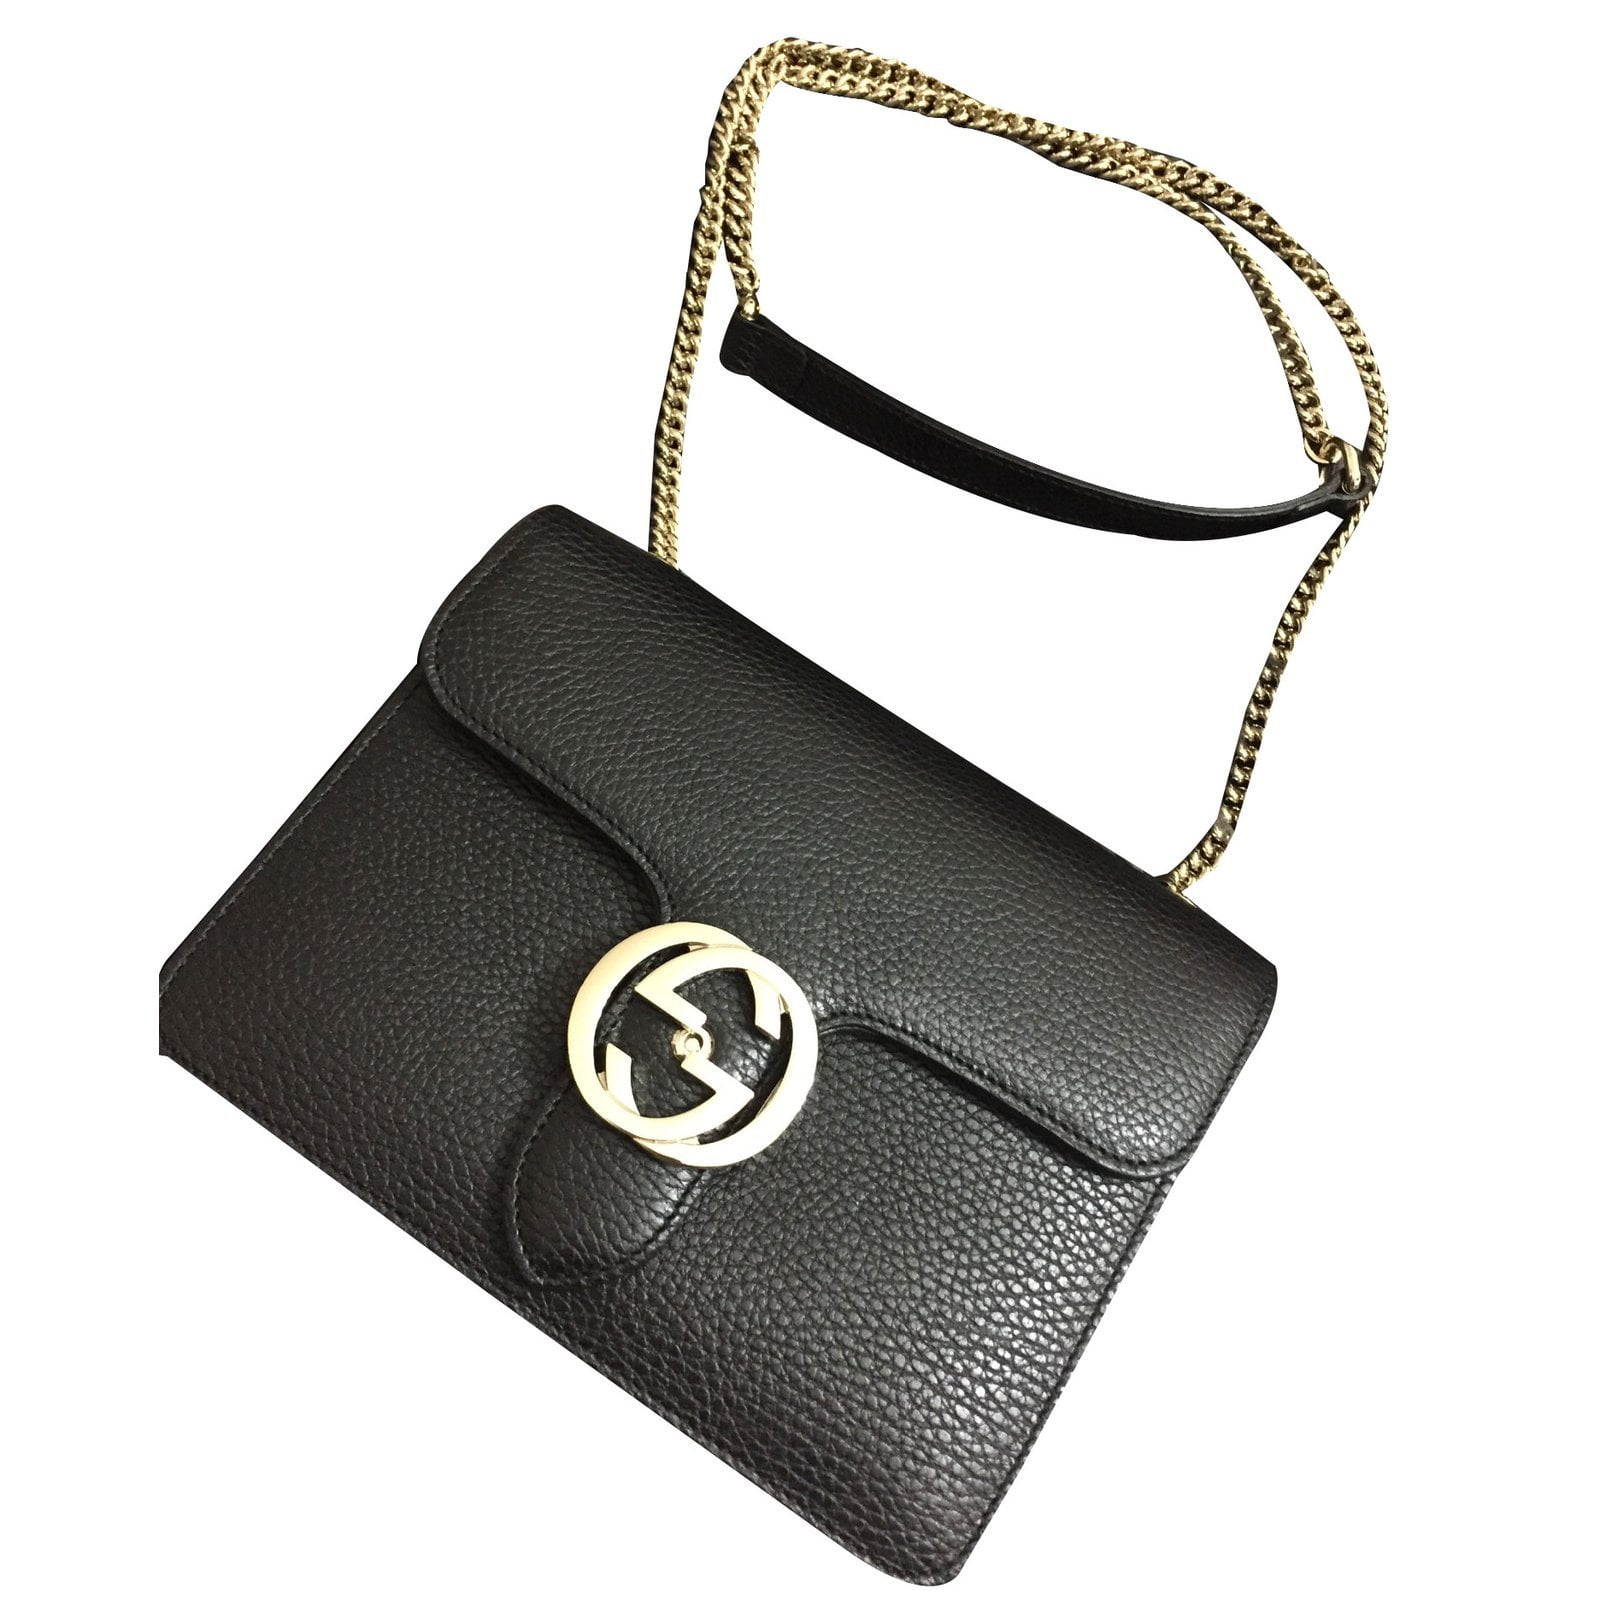 GG Black Leather Shoulder Bag Pebble Handbag Italy New Crossbody -